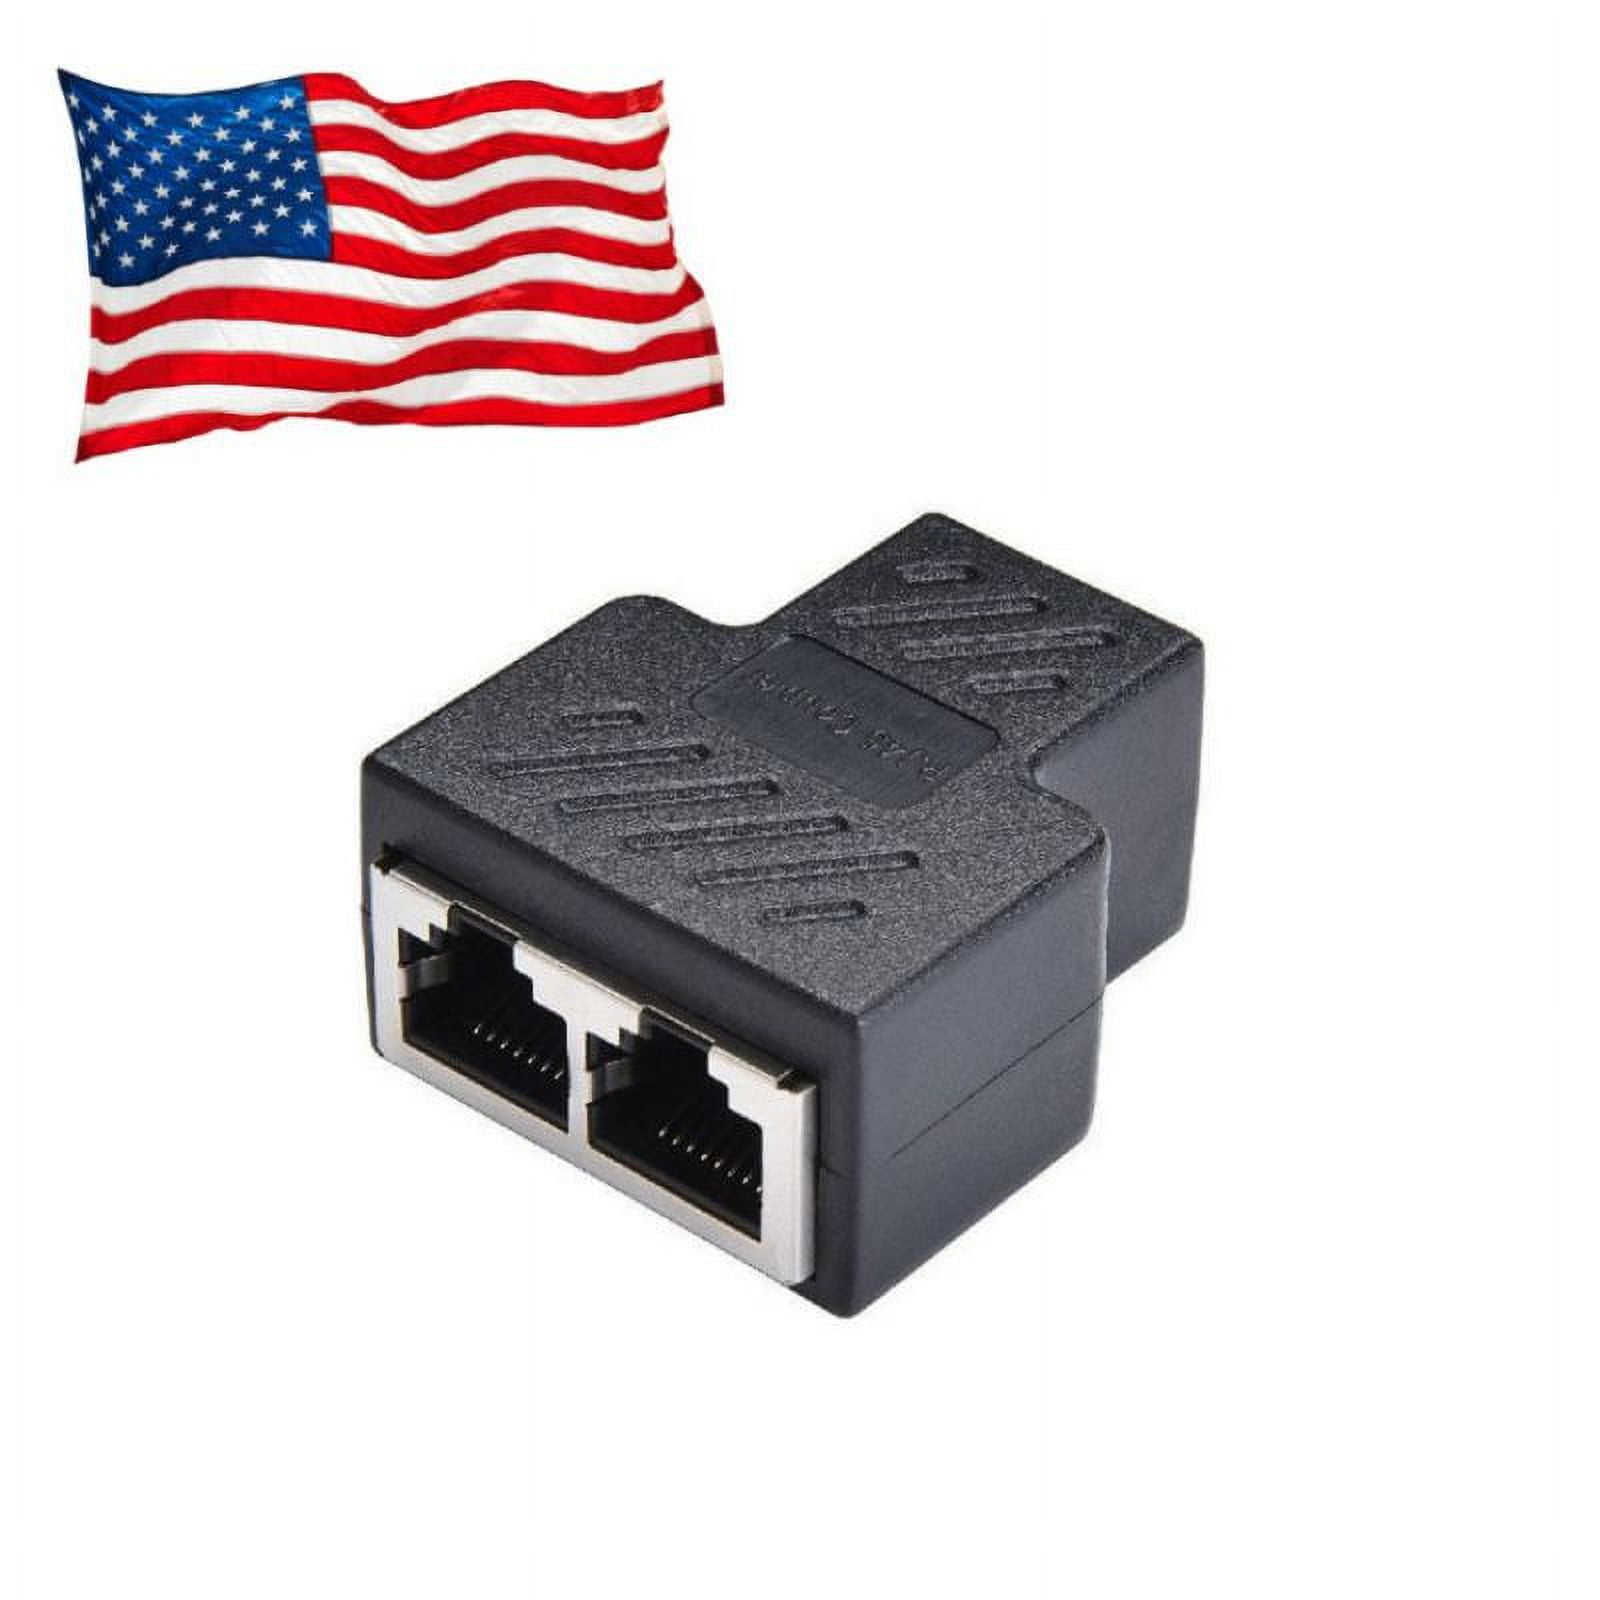 1Pcs RJ45 Ethernet Splitter Adapter, RJ45 1 1 to 2 Ways Dual Female Port  LAN Ethernet Cable for CAT5/6/7 